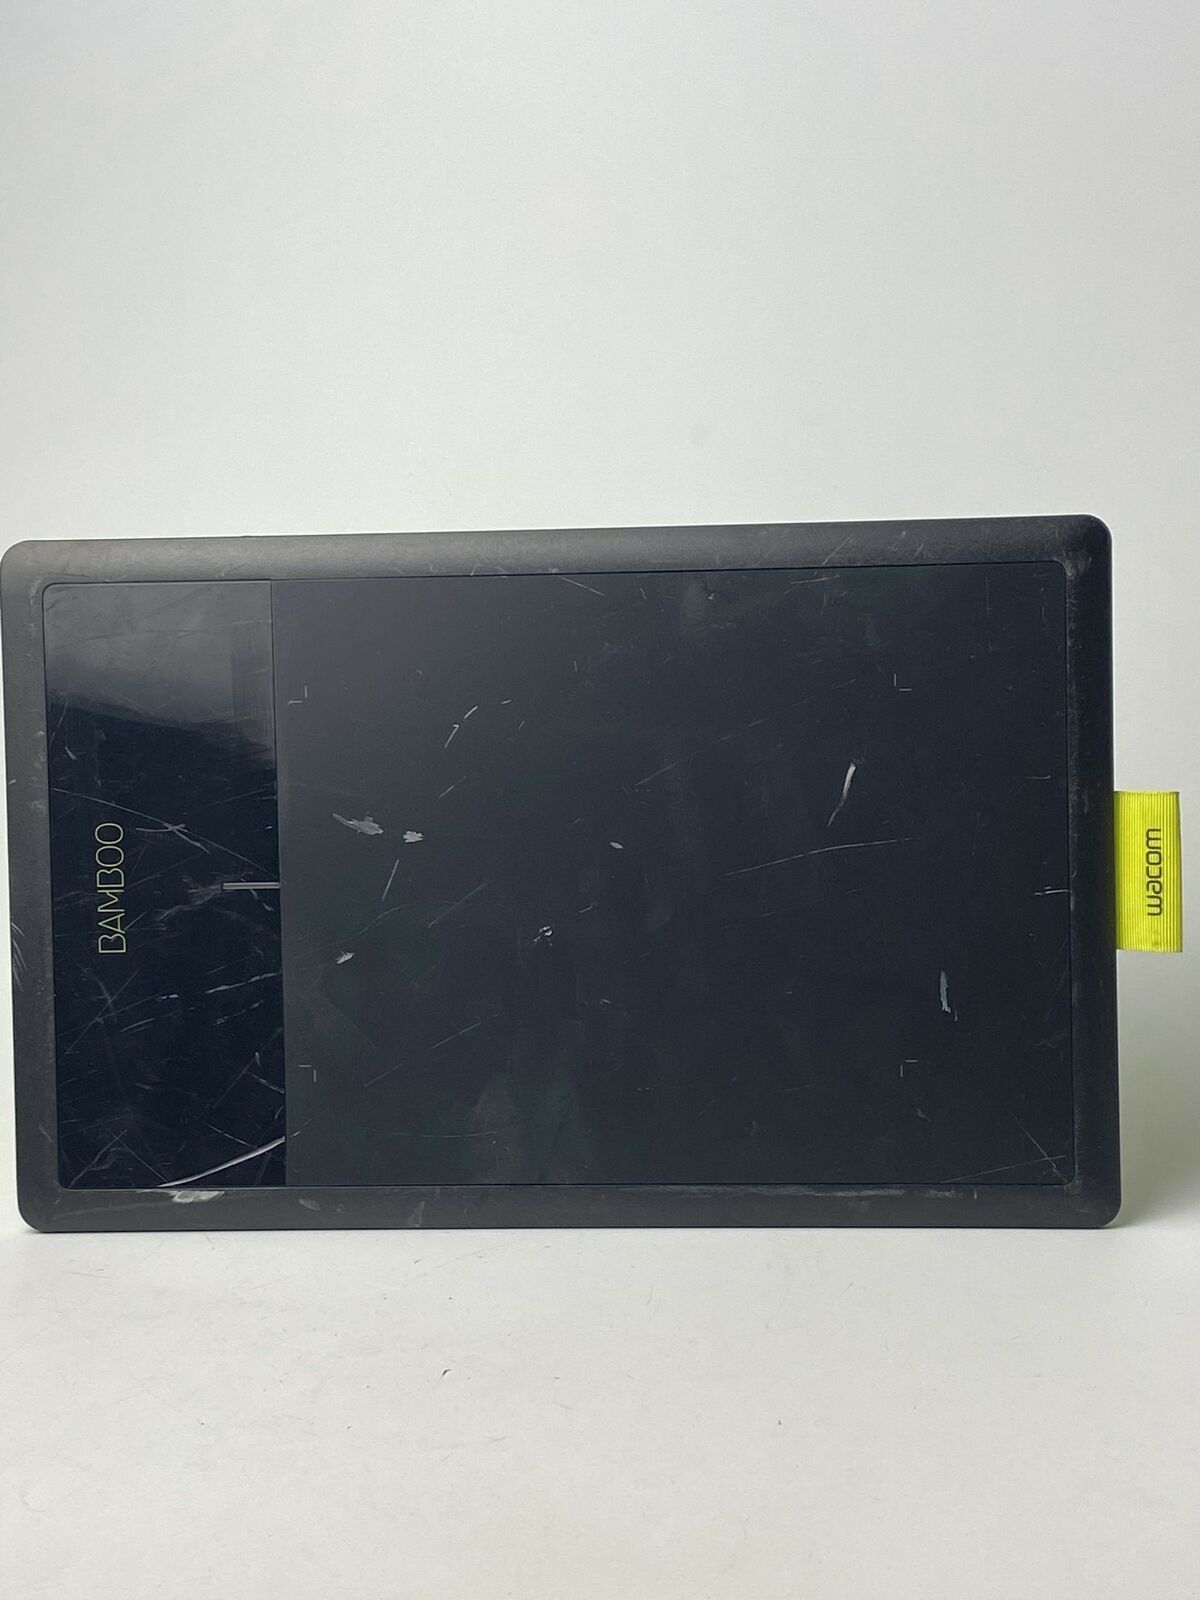 Wacom Bamboo CTL-470 Black Slim Touch Digital Graphics Drawing Tablet